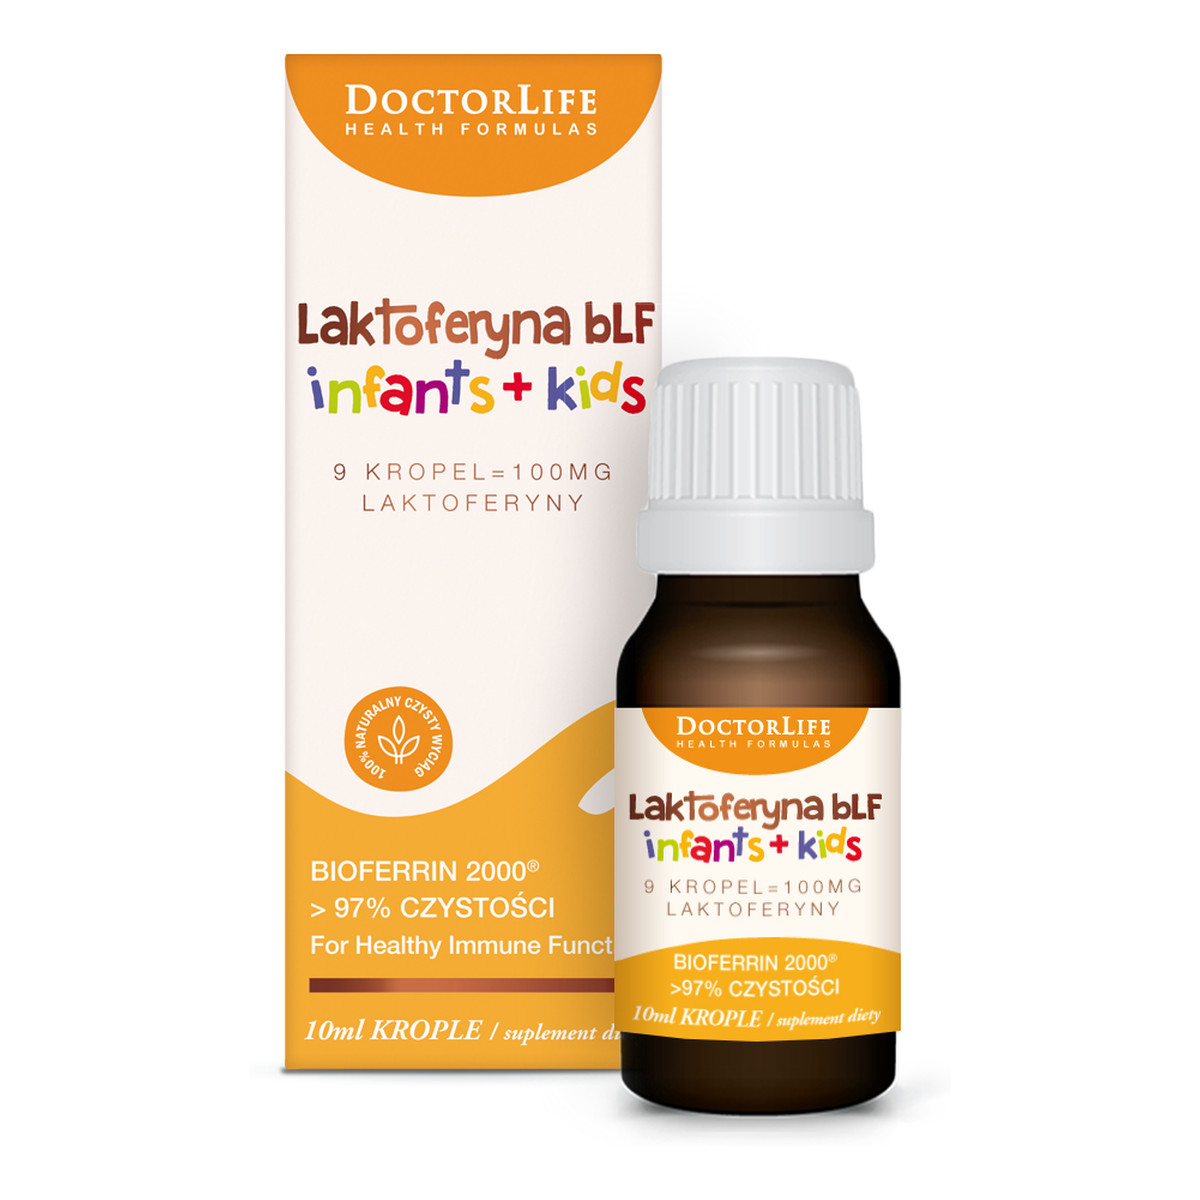 Doctor Life Laktoferyna blf infants + kids 100mg suplement diety w kroplach